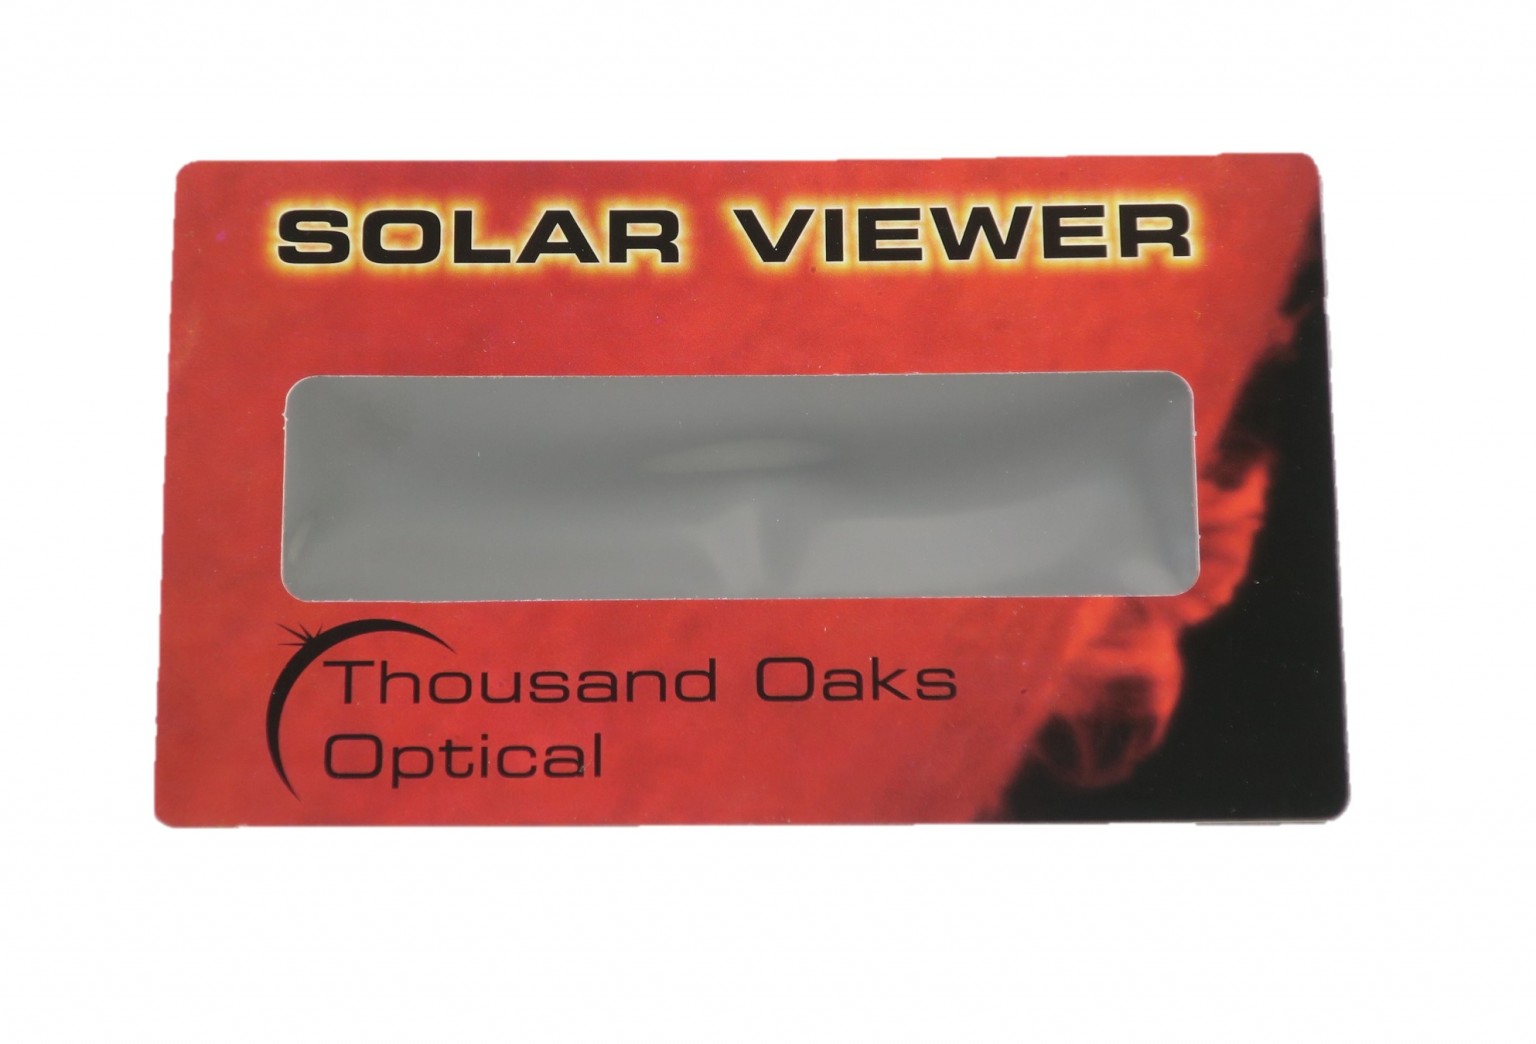 Thousand Oaks Optical Solar Viewer 太陽濾膜 10張